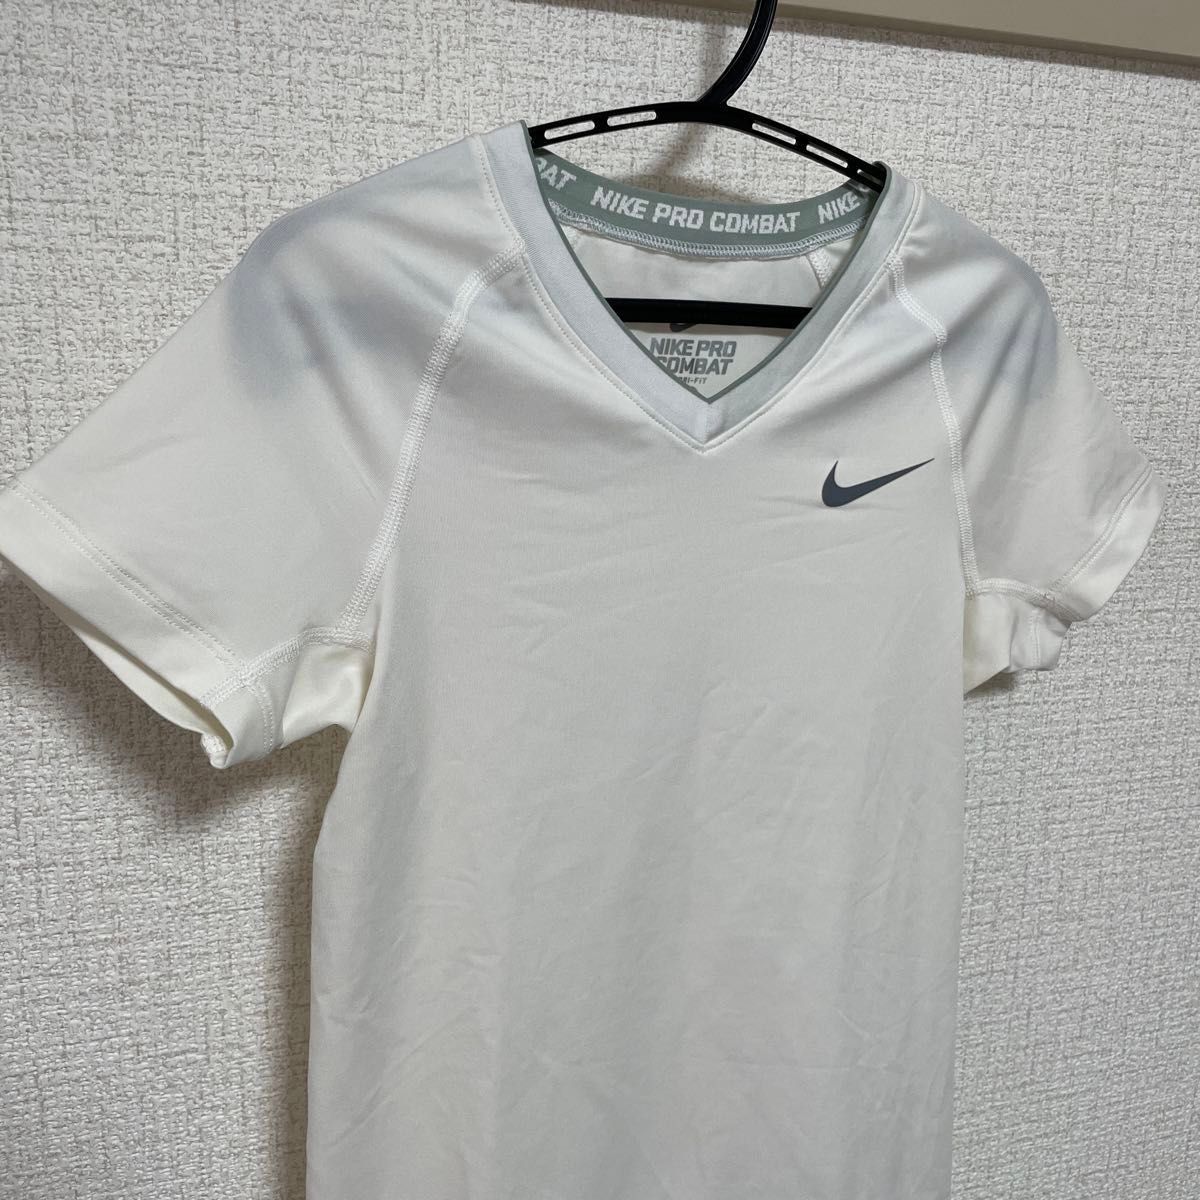 Tシャツ NIKE PRO COMBAT COMPRESSION コンプレッション トレーニング 半袖 中古品